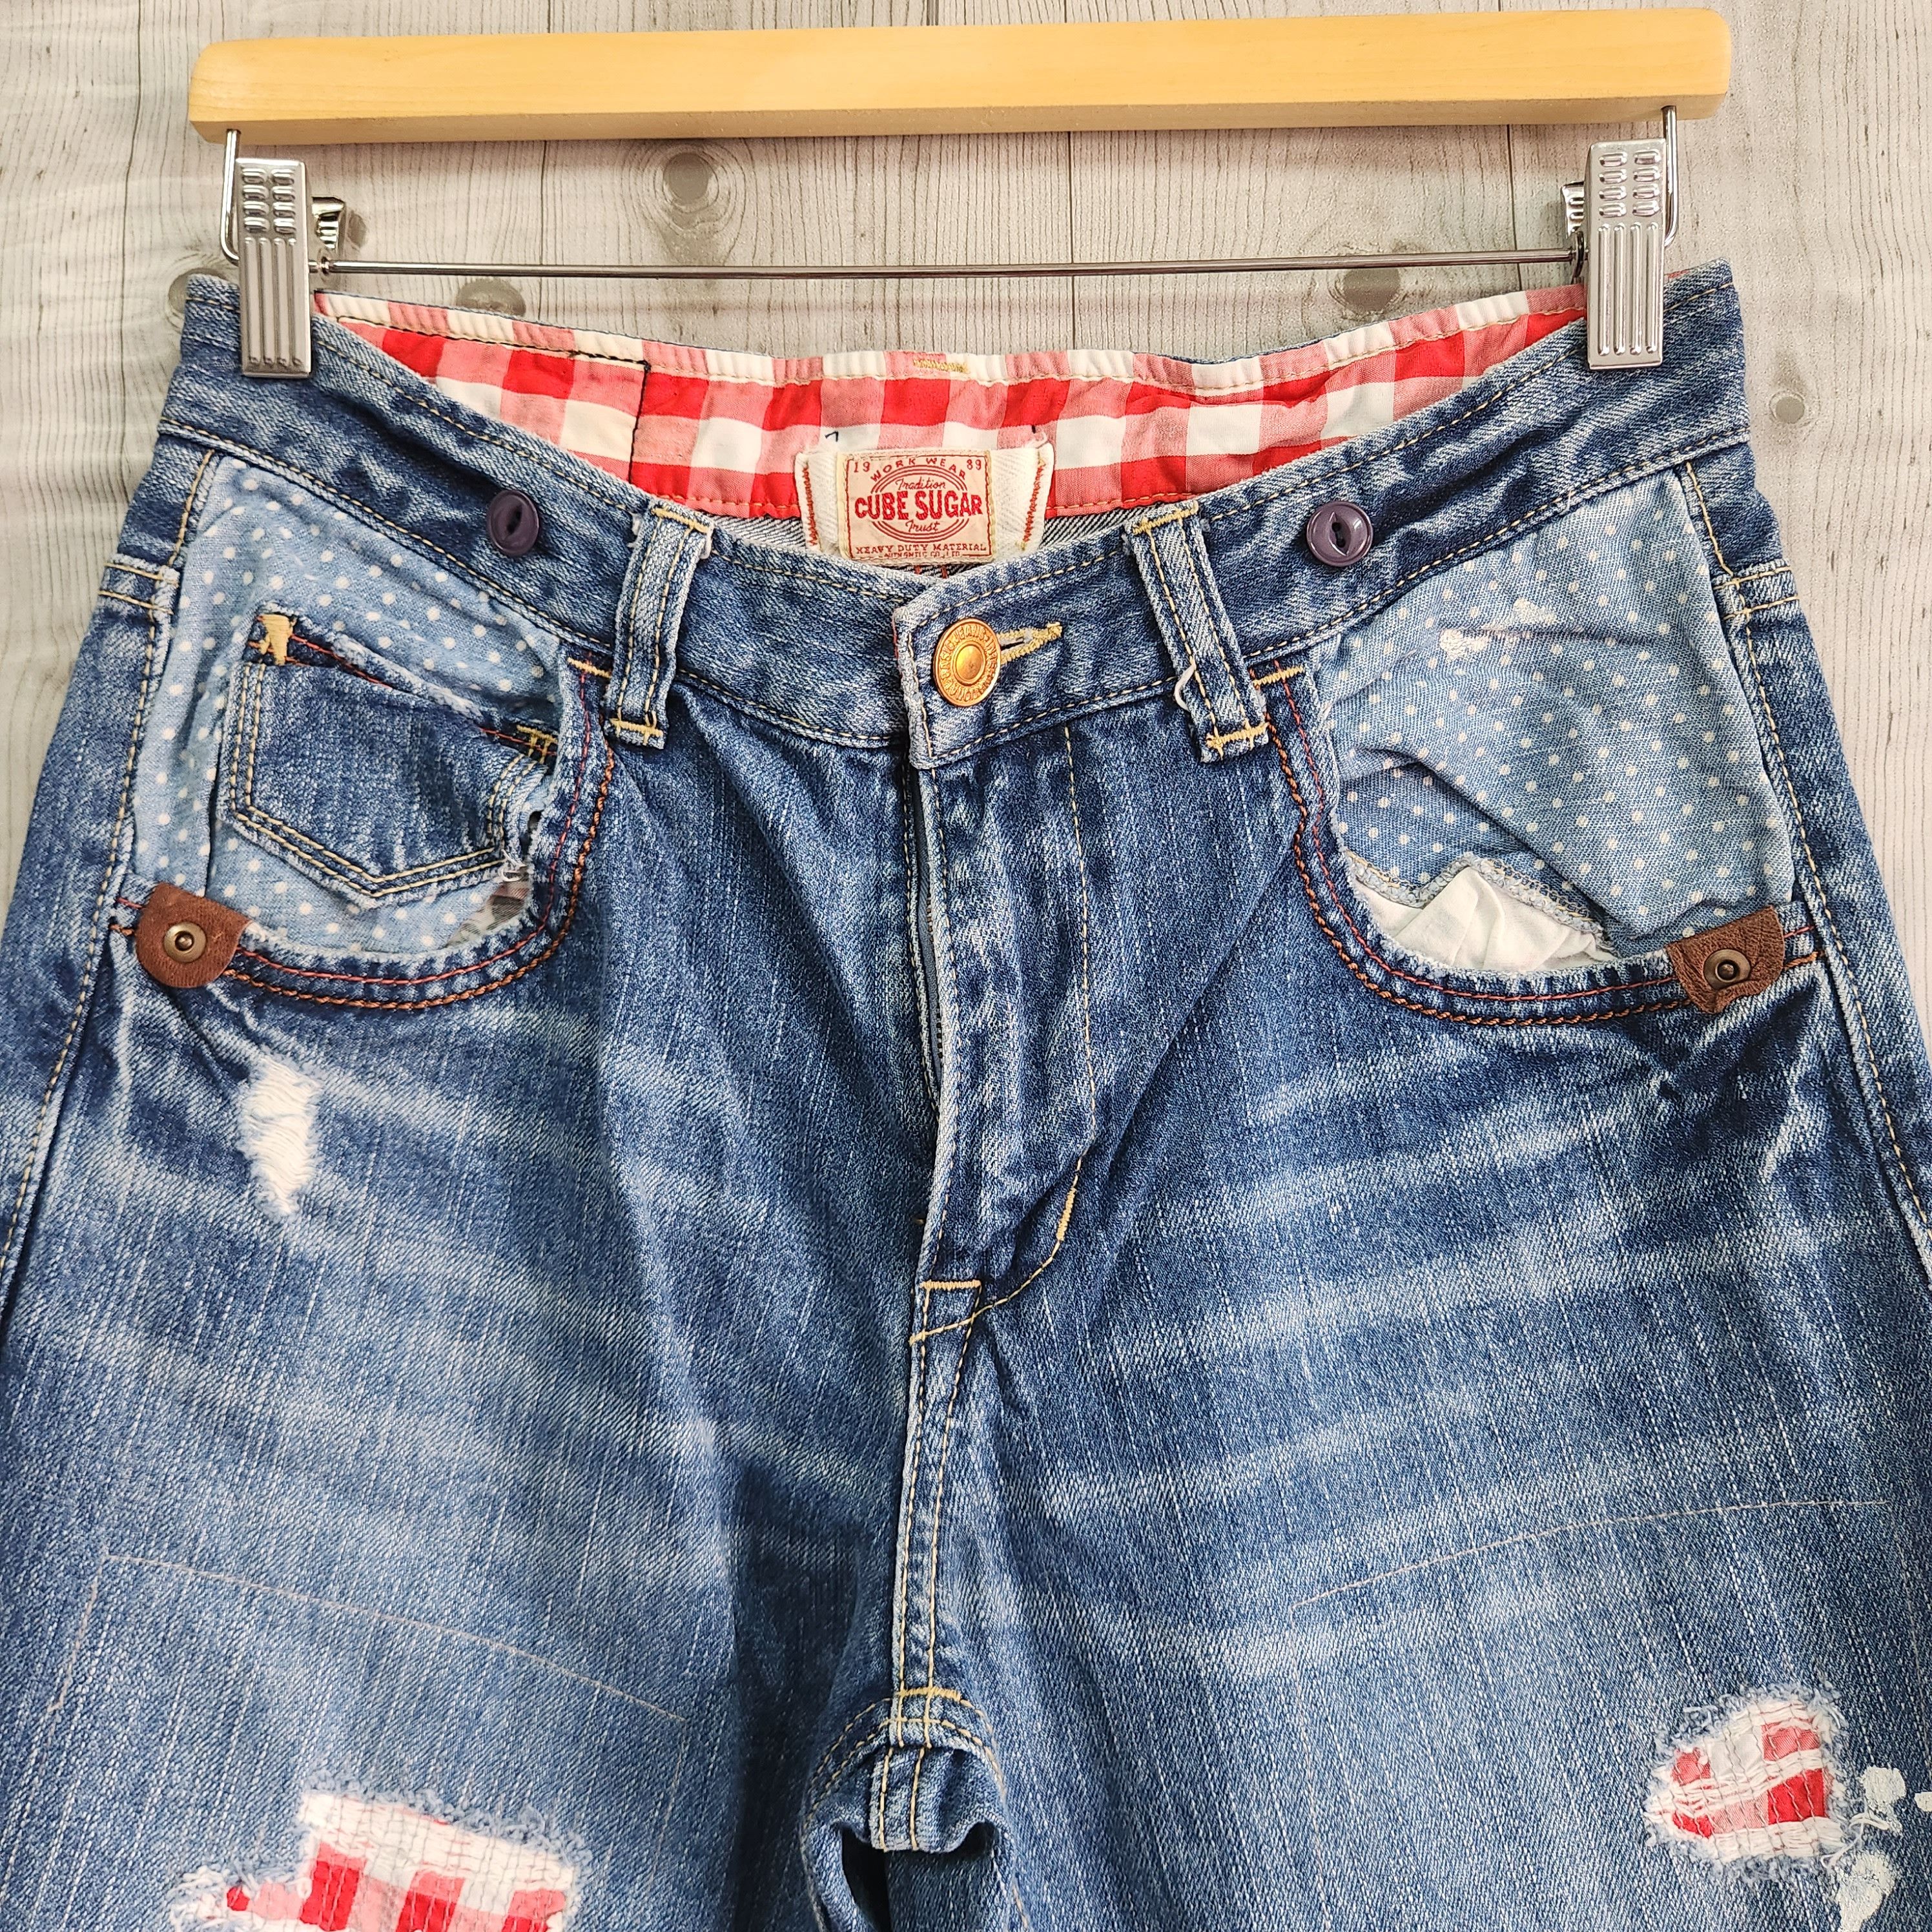 Distressed Denim - Distressed Sashiko Denim Cube Sugar Japanese Jeans - 15